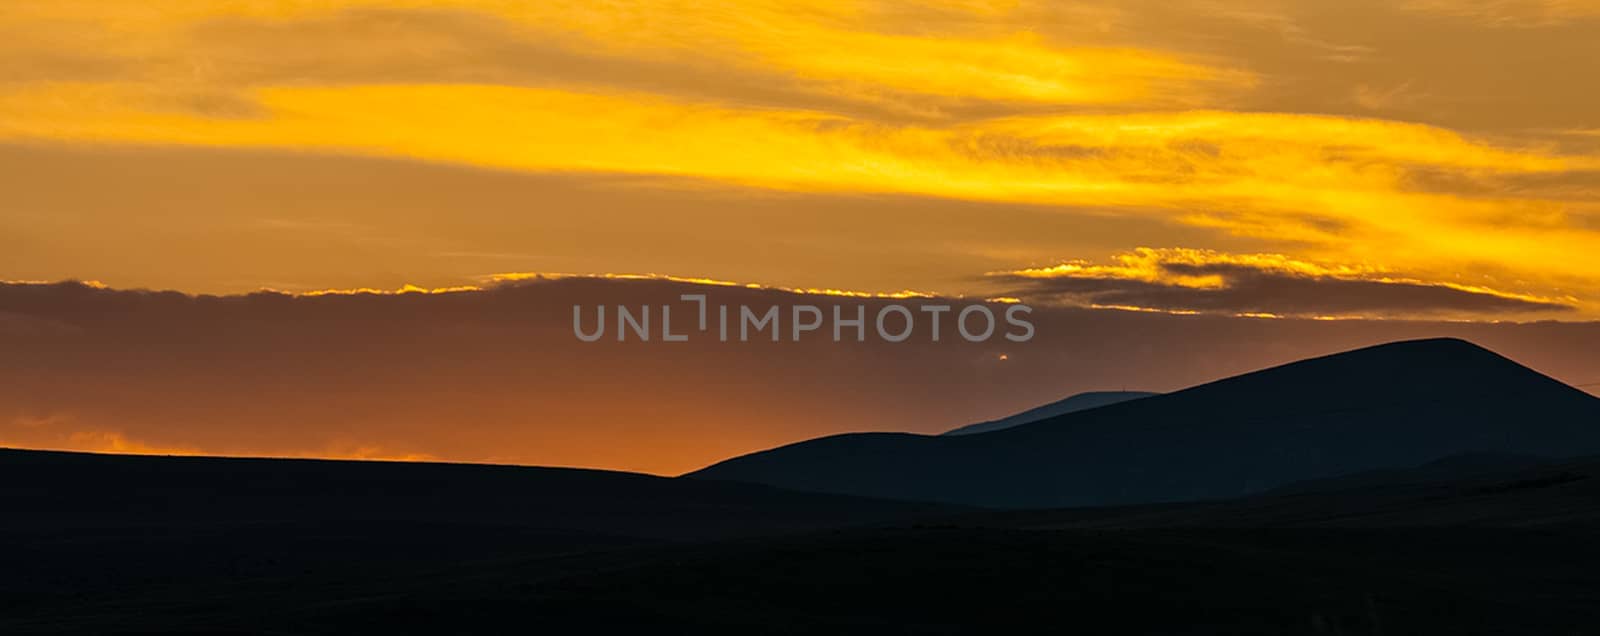 Paronama - sunset over the altai mountains. by DePo